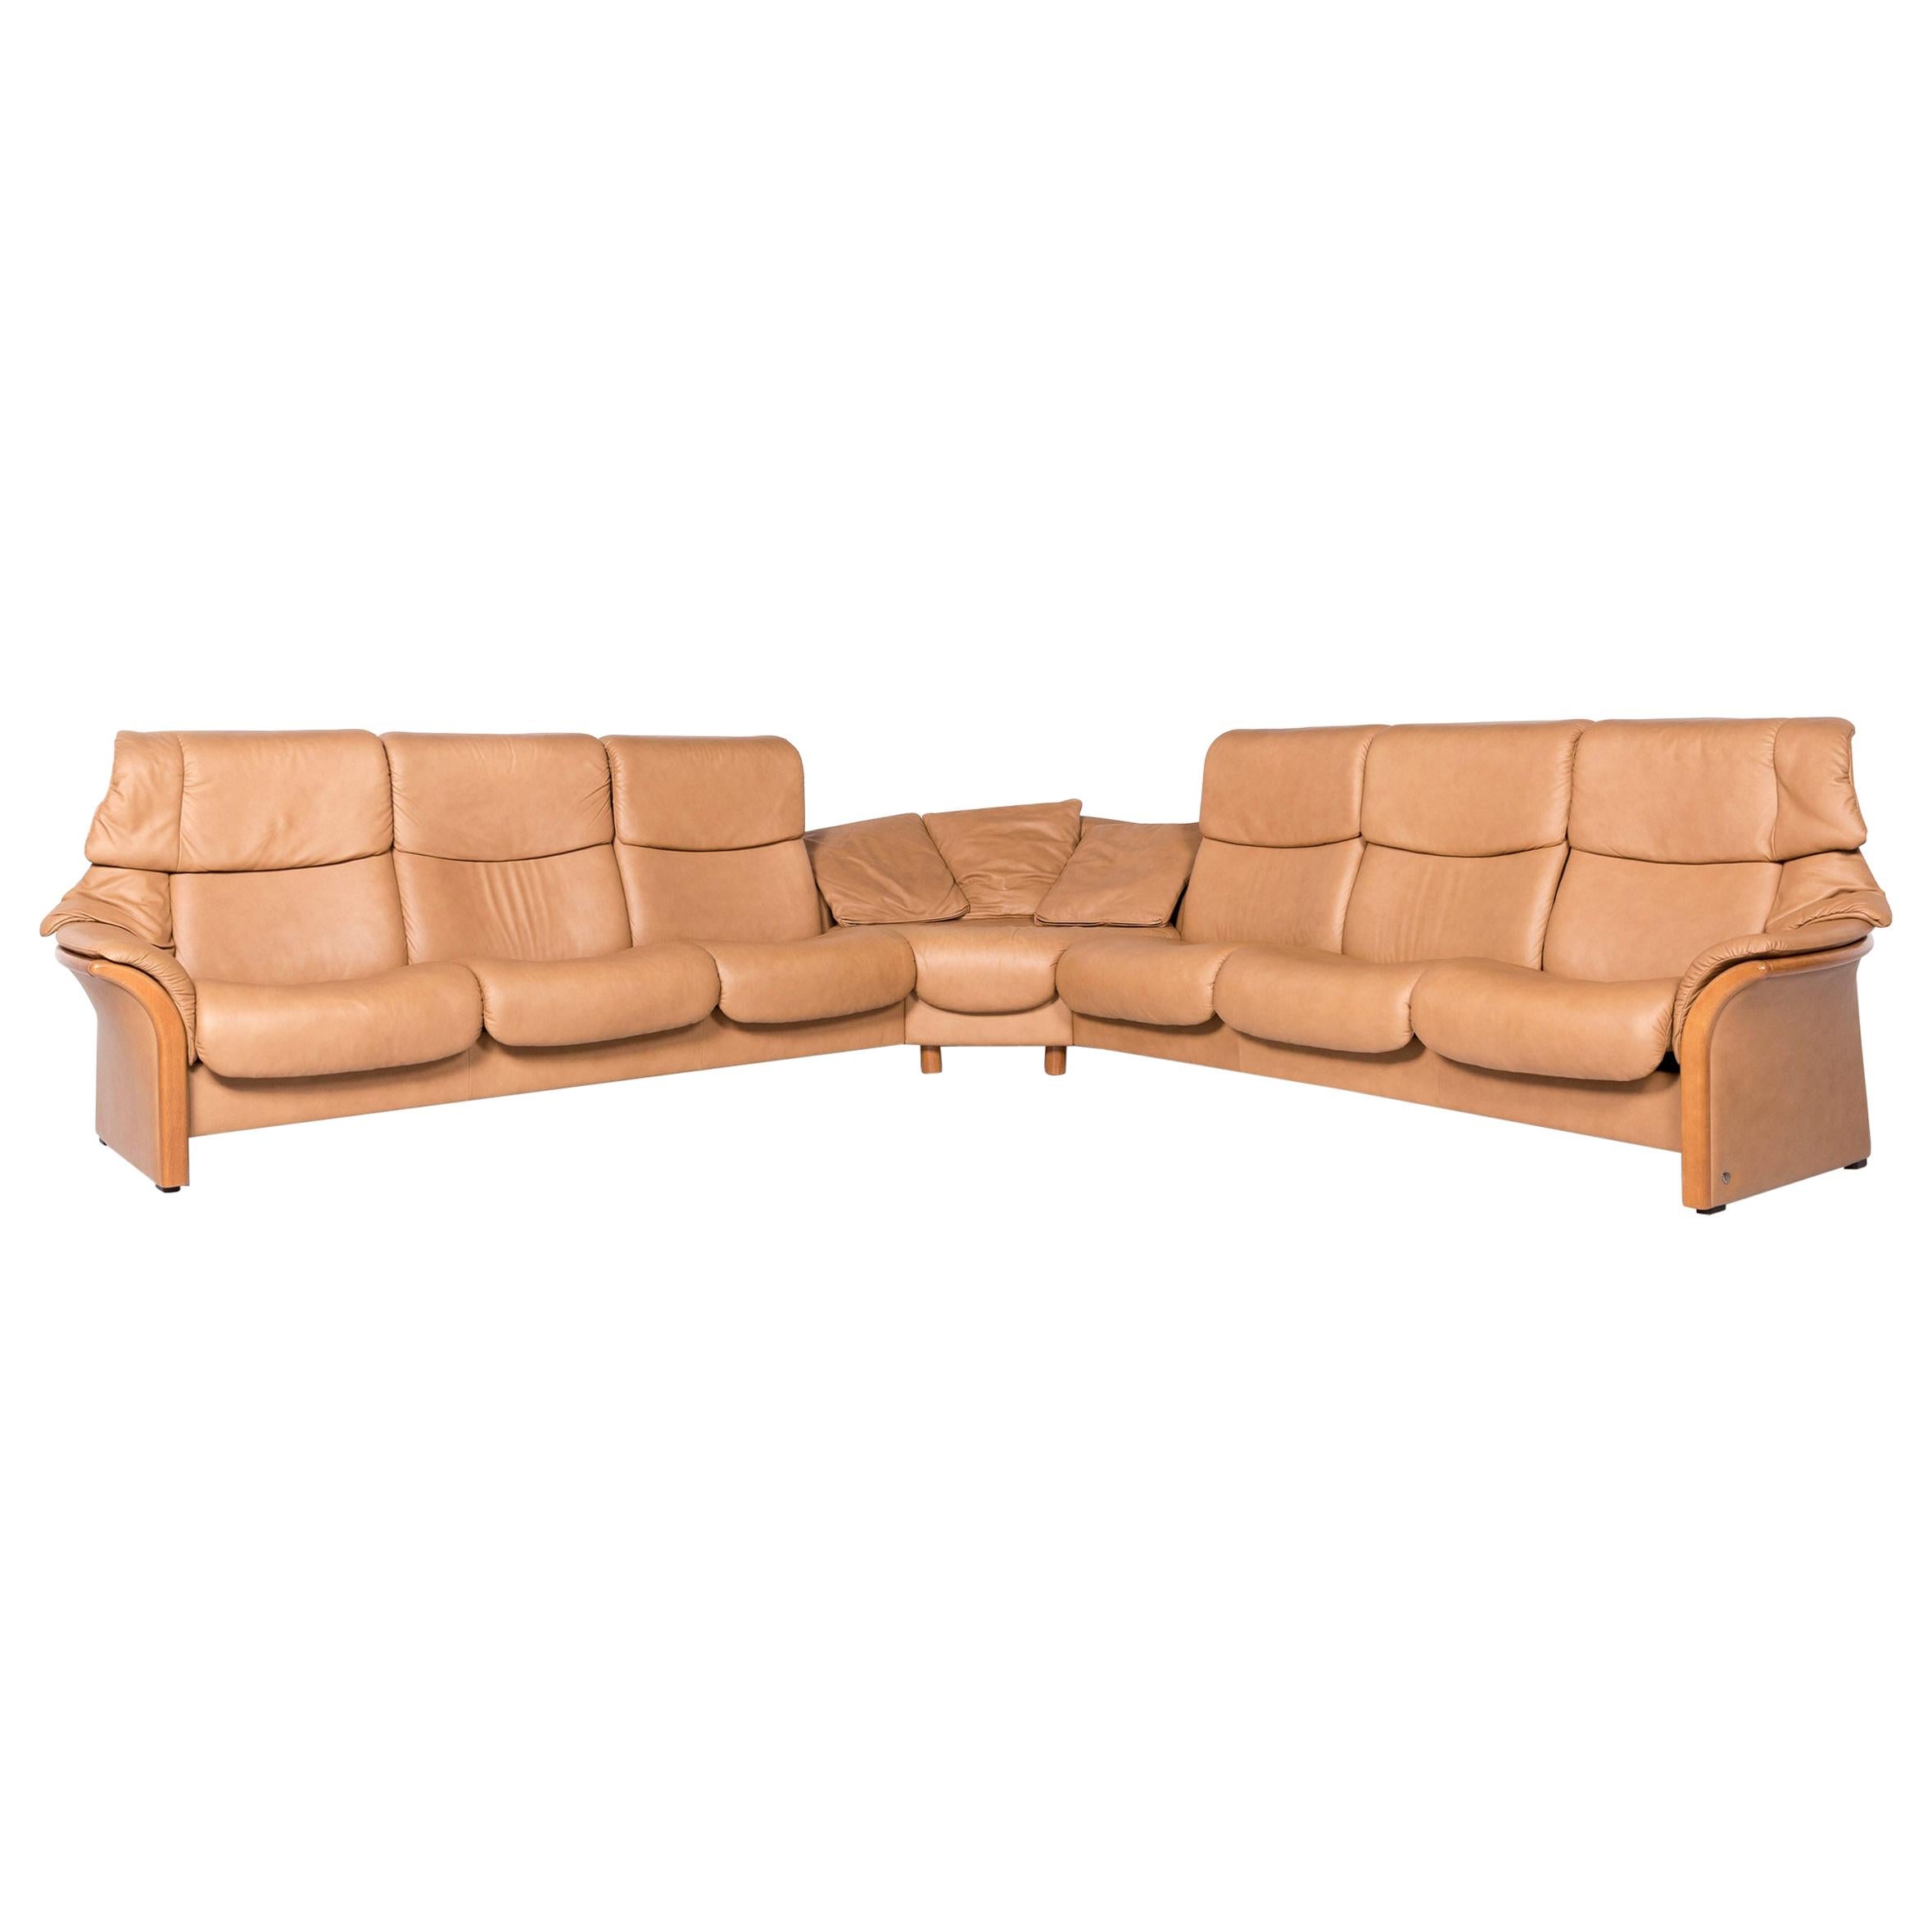 Stressless Eldorado Designer Leather Corner Sofa Beige Real Leather Sofa Couch